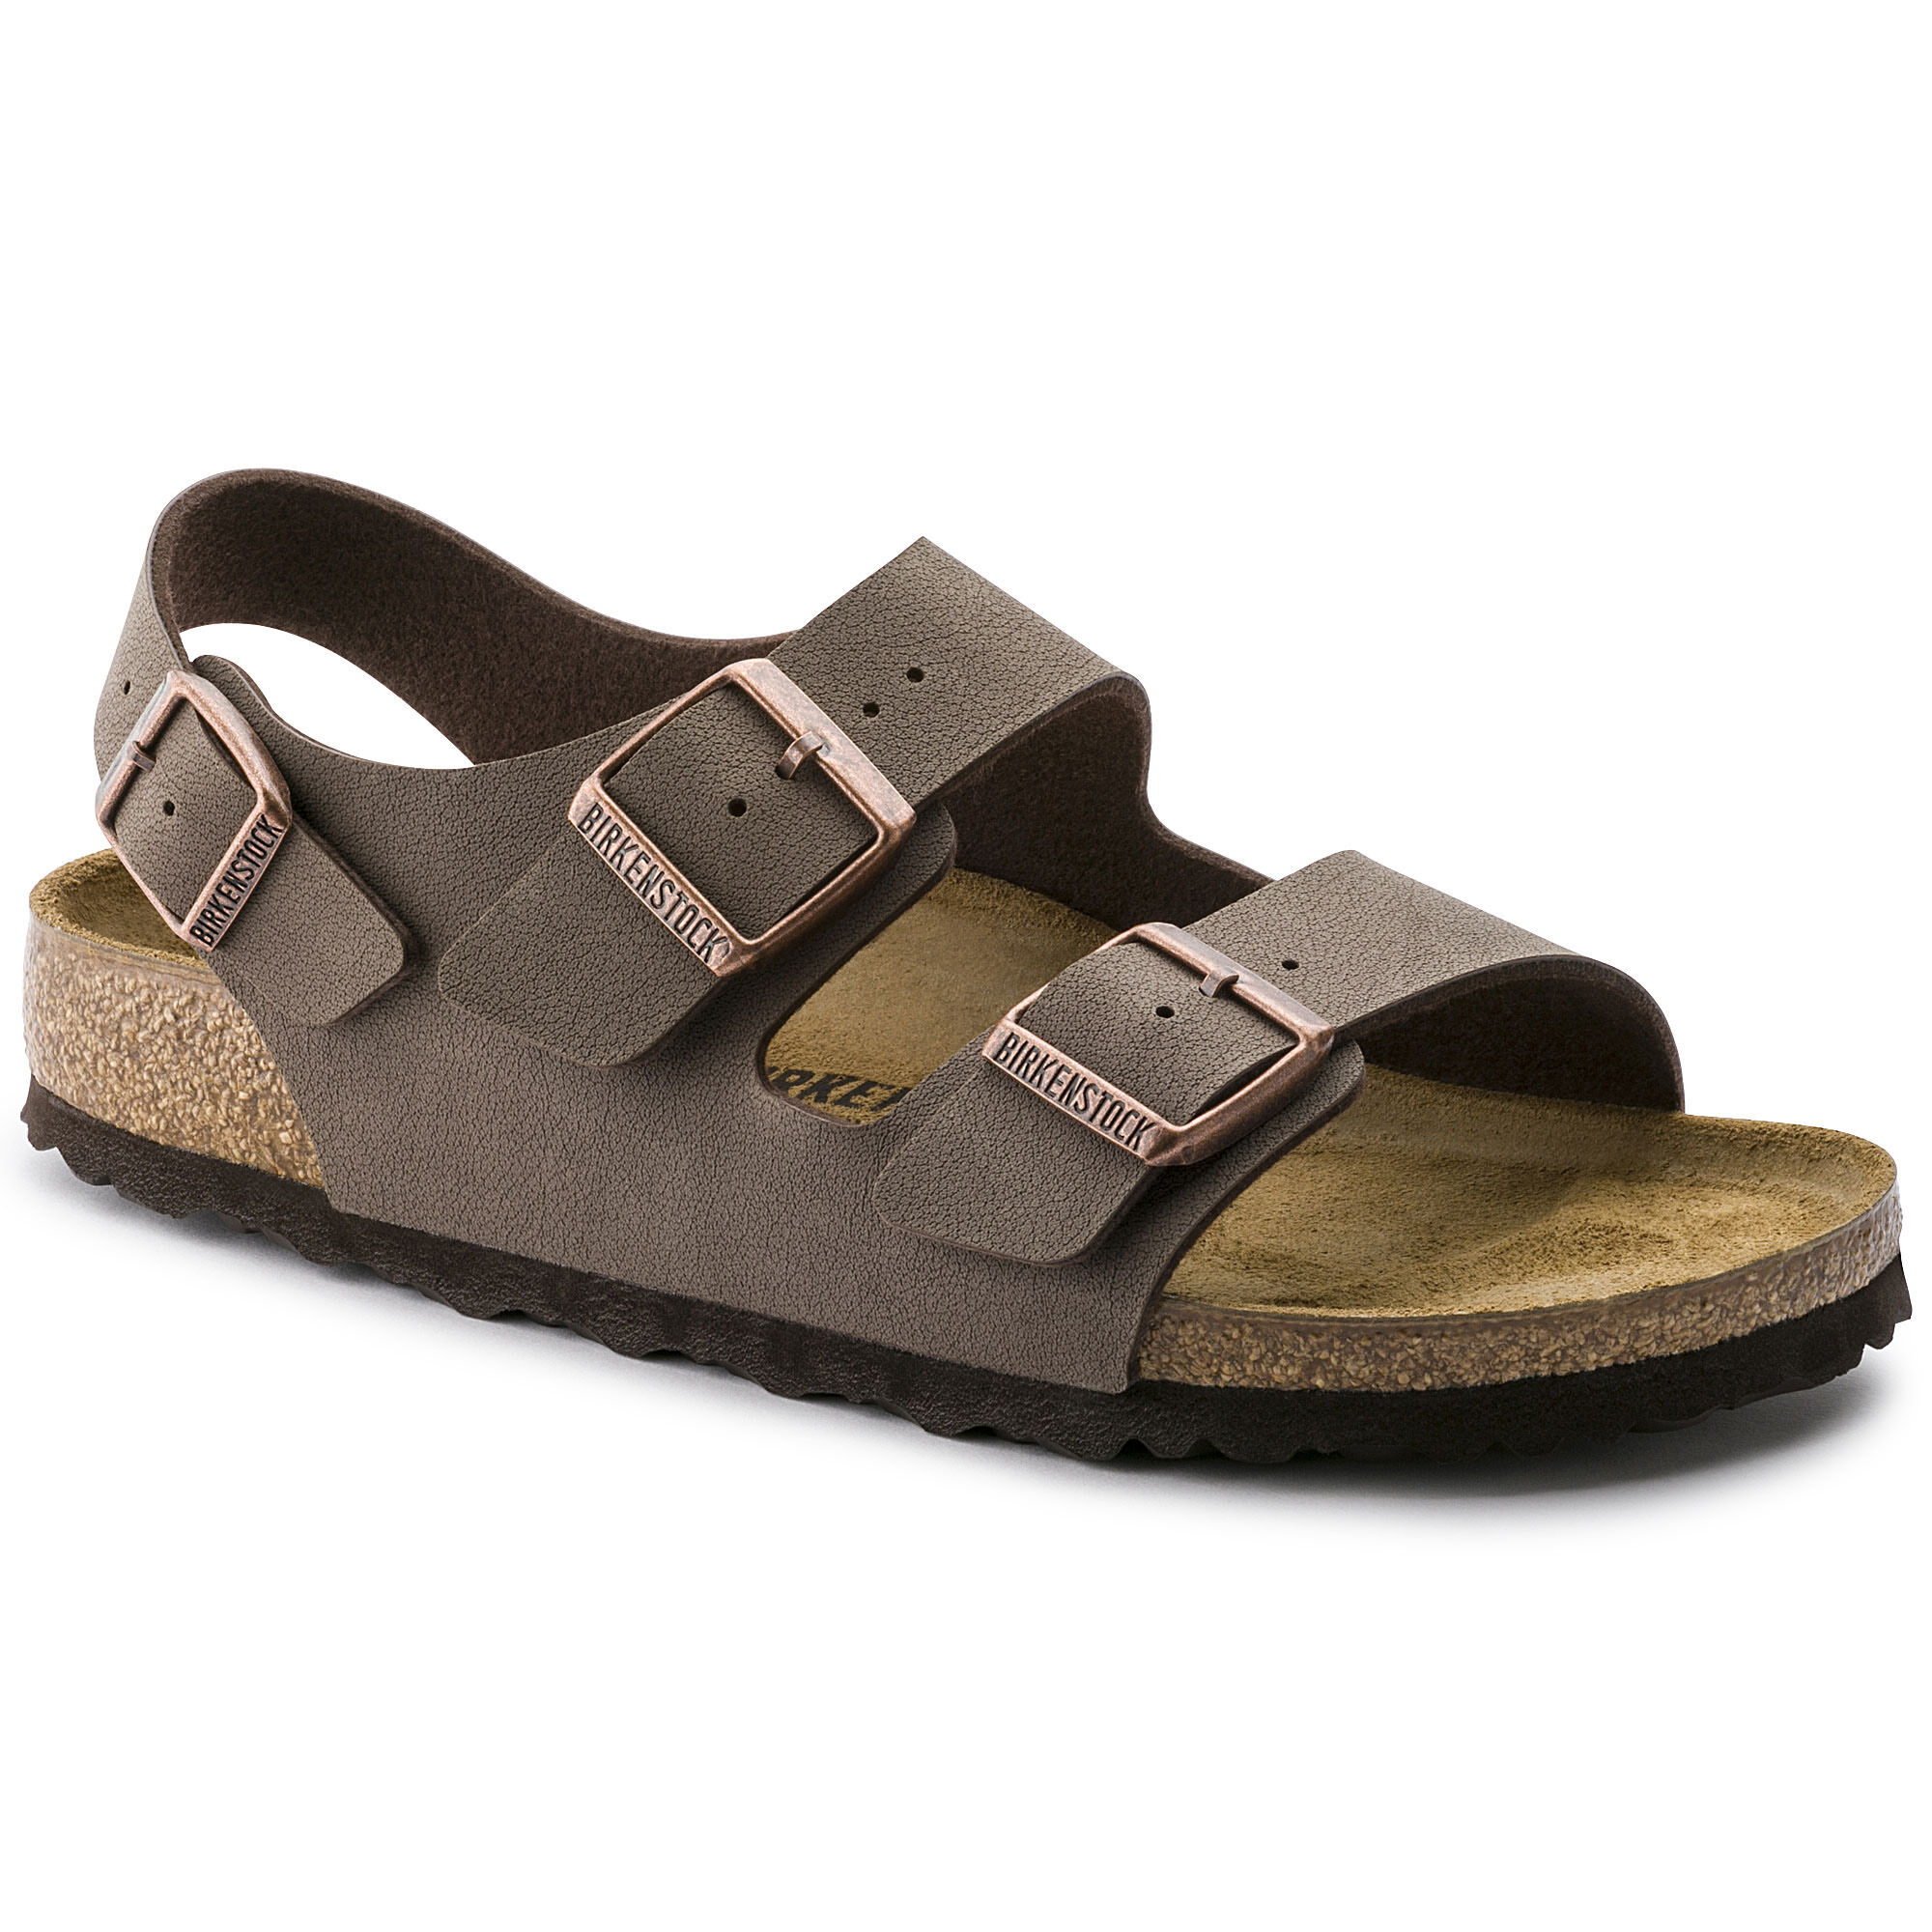 birkenstock strappy sandals